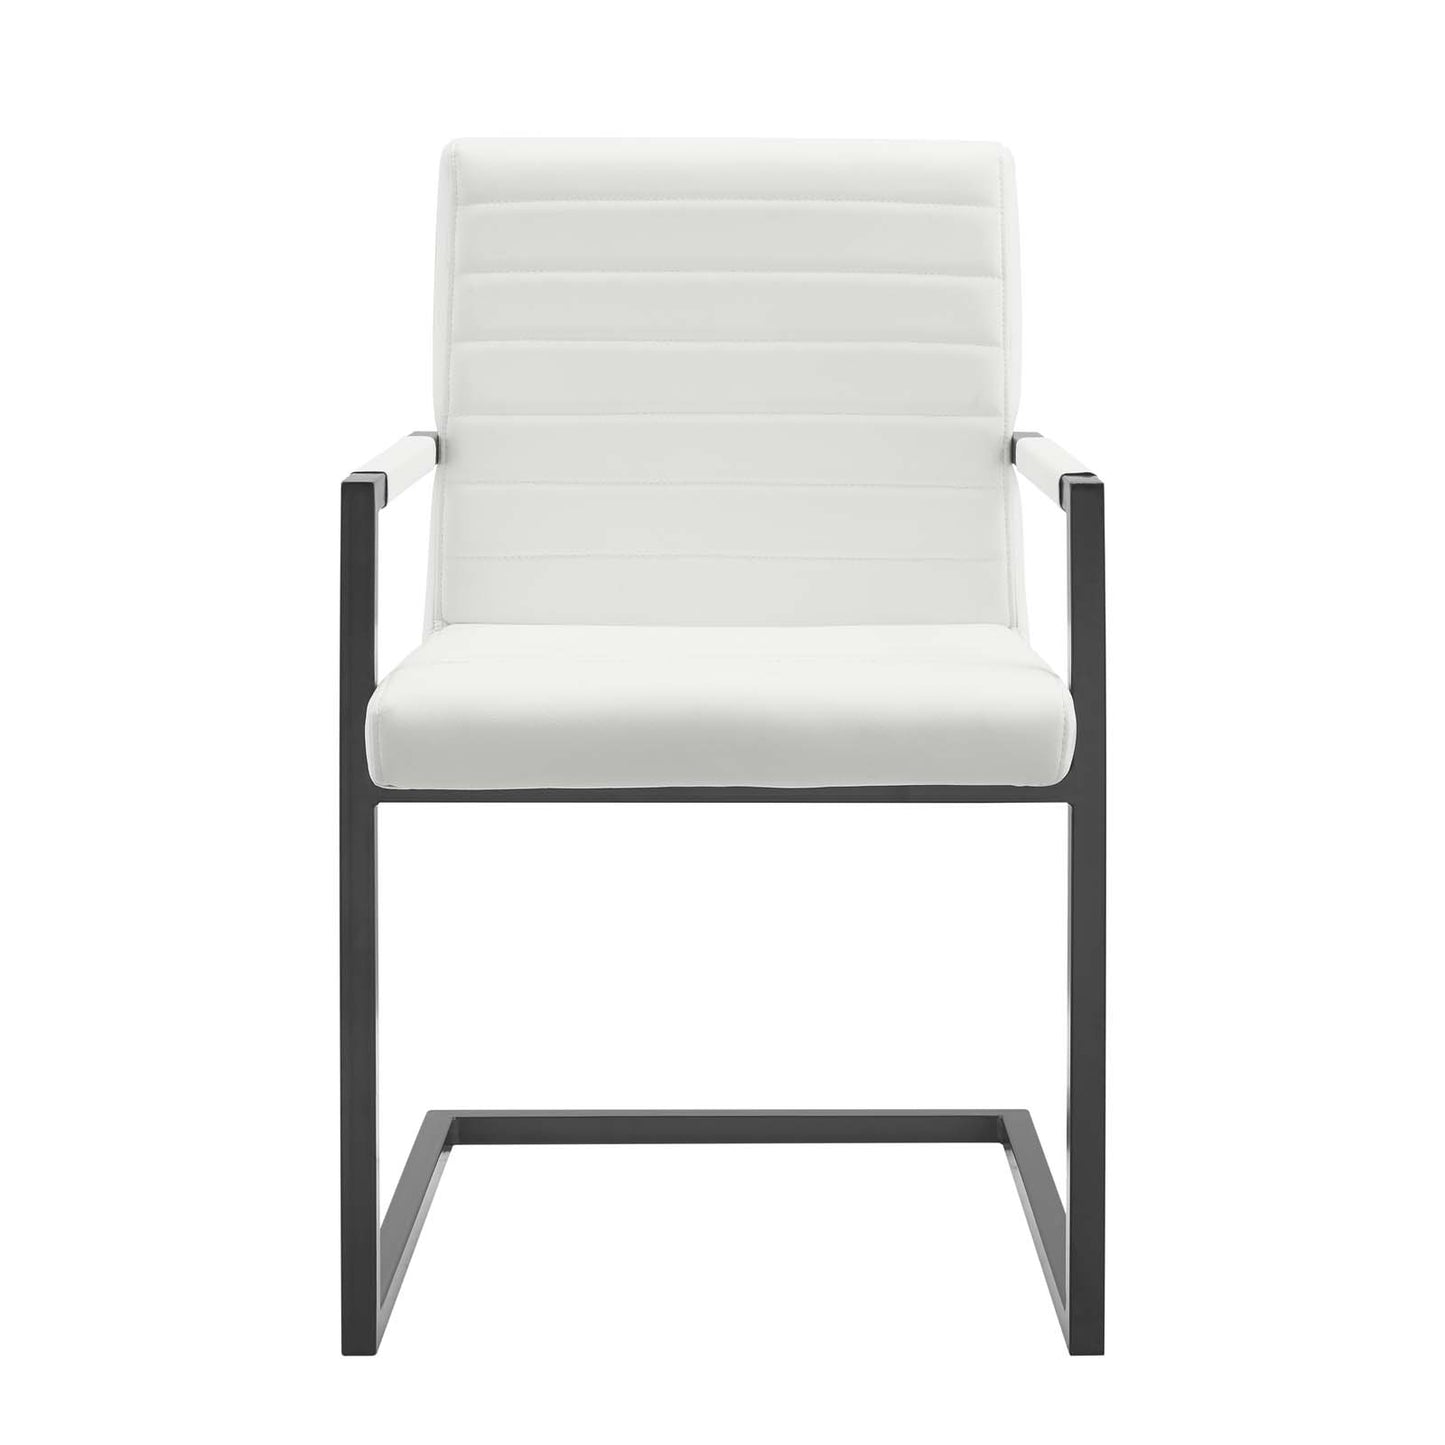 Savoy Vegan Leather Dining Chairs - Set of 2 White EEI-4522-WHI